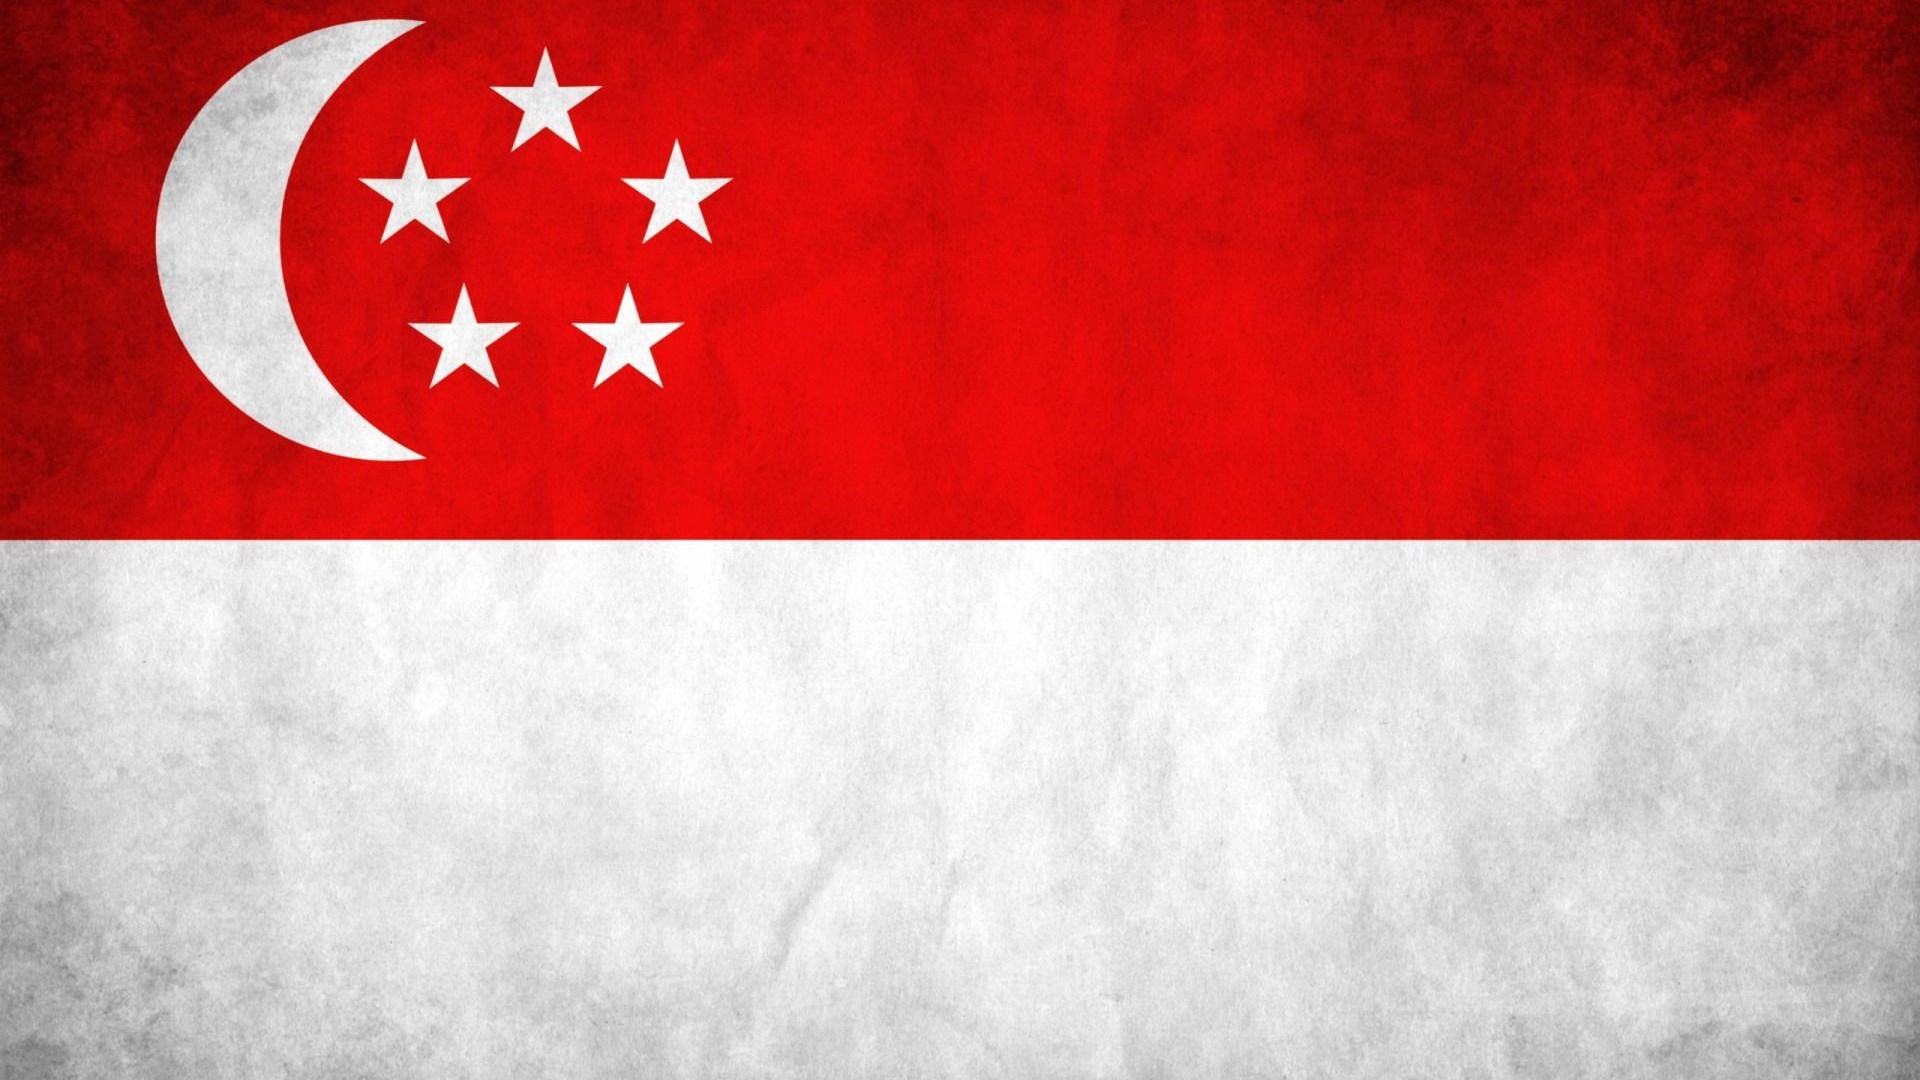 Singapore Flag Wallpaper High Definition Quality Widescreen